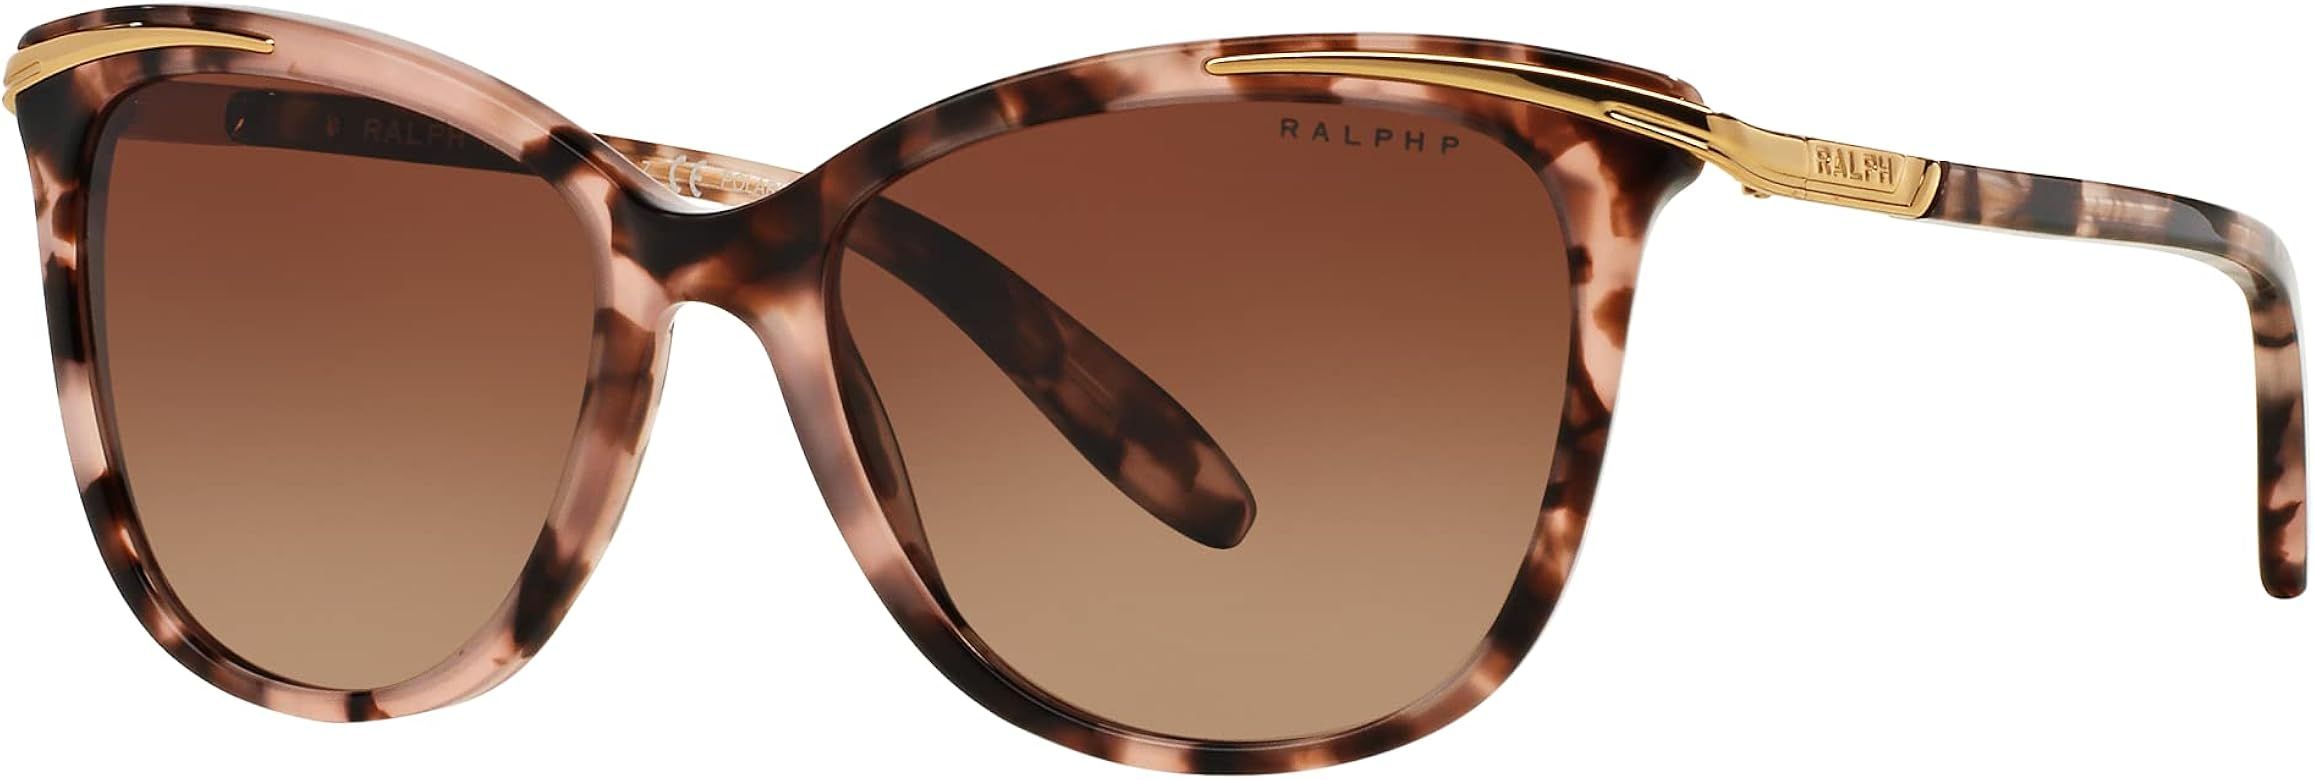 Ralph Woman Sunglasses Shiny Pink Tortoise & Gold Frame, Polar Gradient Brown Lenses, 54MM | Amazon (US)